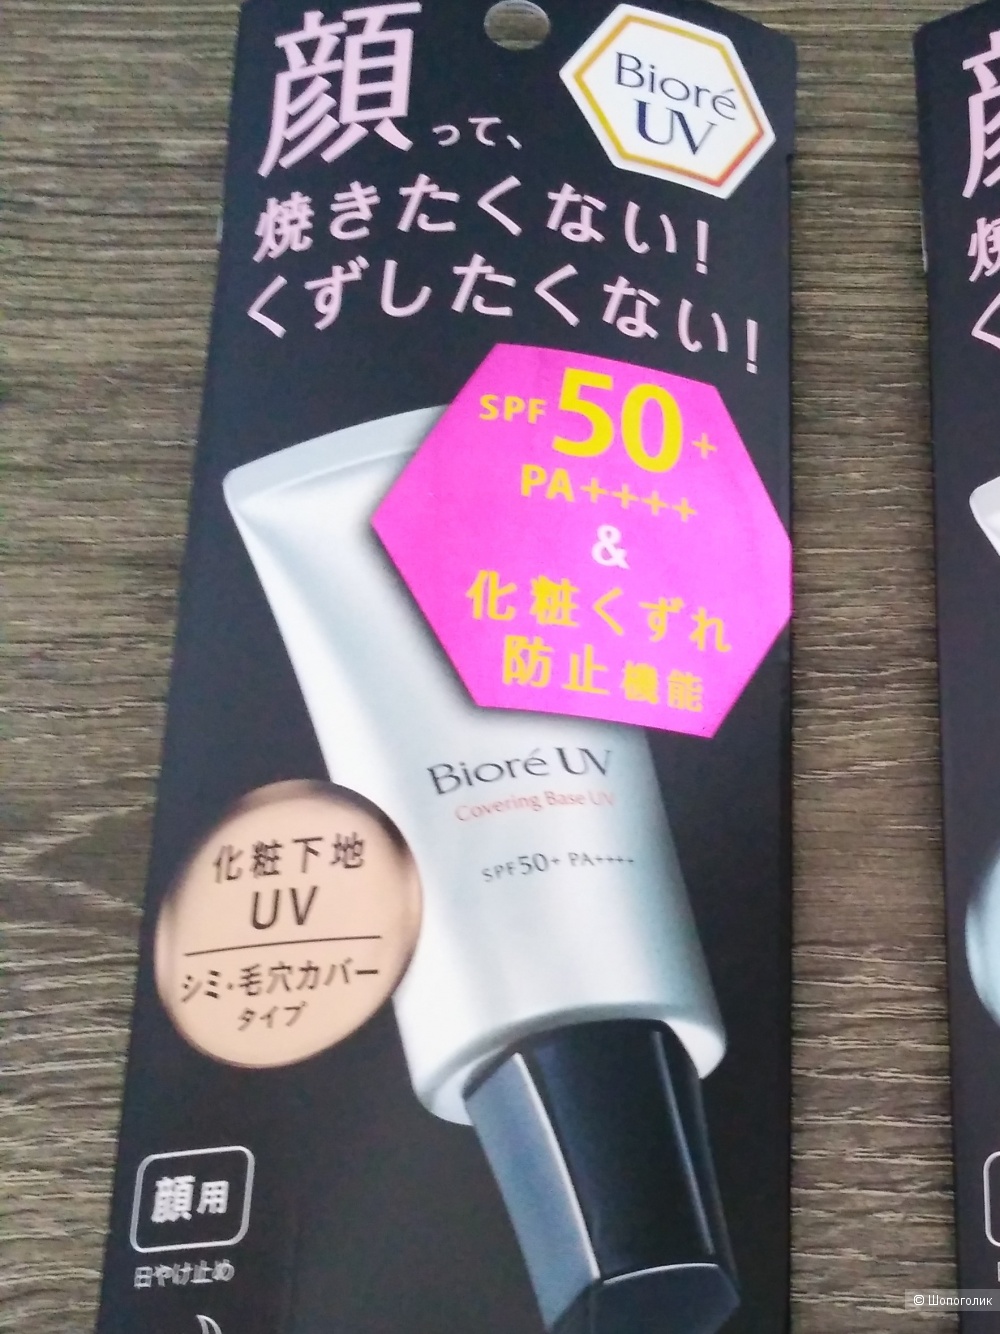 BIORE UV SPF 50+санскрин матирующий, маскирующий. Япония